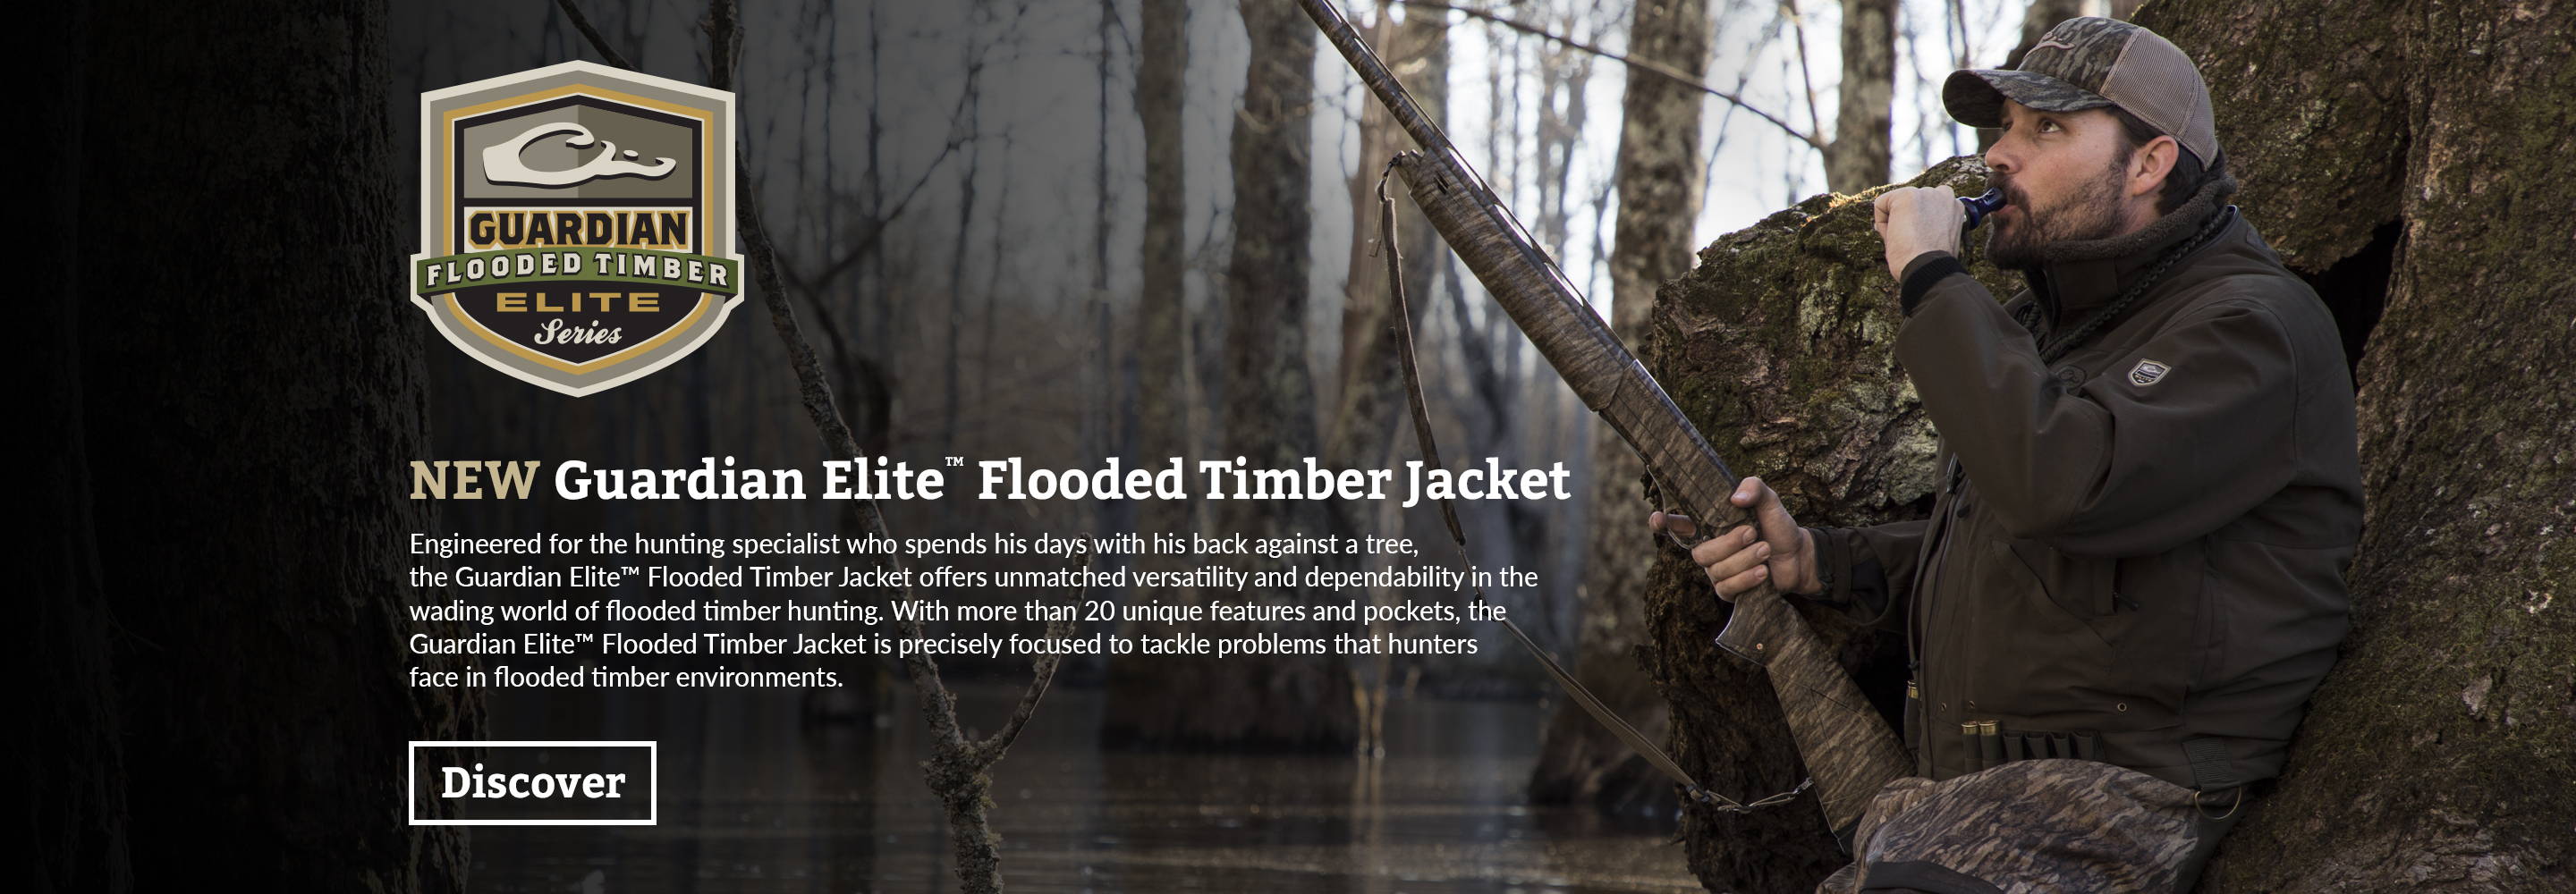 guardian elite flooded timber jacket